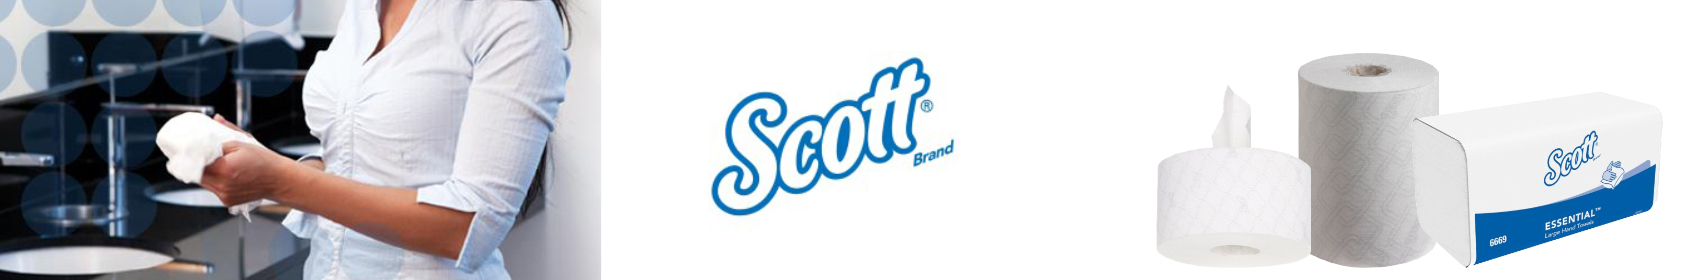 scott-banner